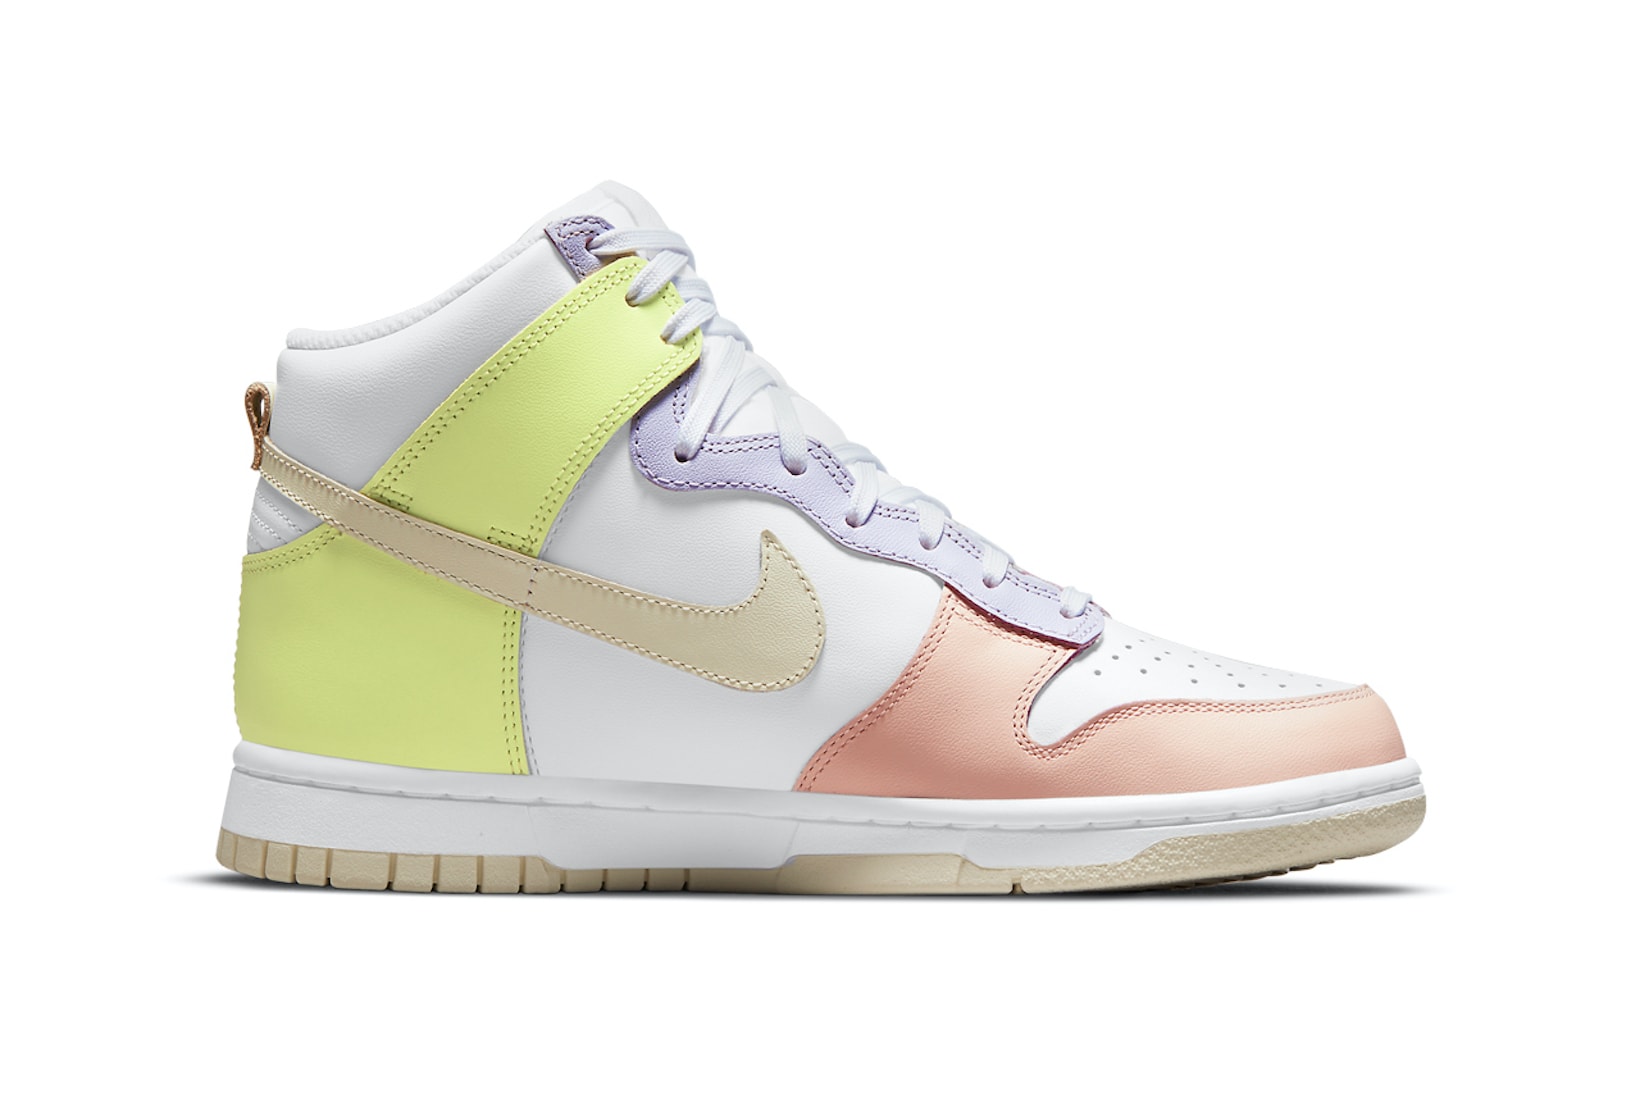 Nike Women's Dunk High Lemon Twist Sneakers Footwear Shoes Kicks Yellow Pink White Purple Lateral